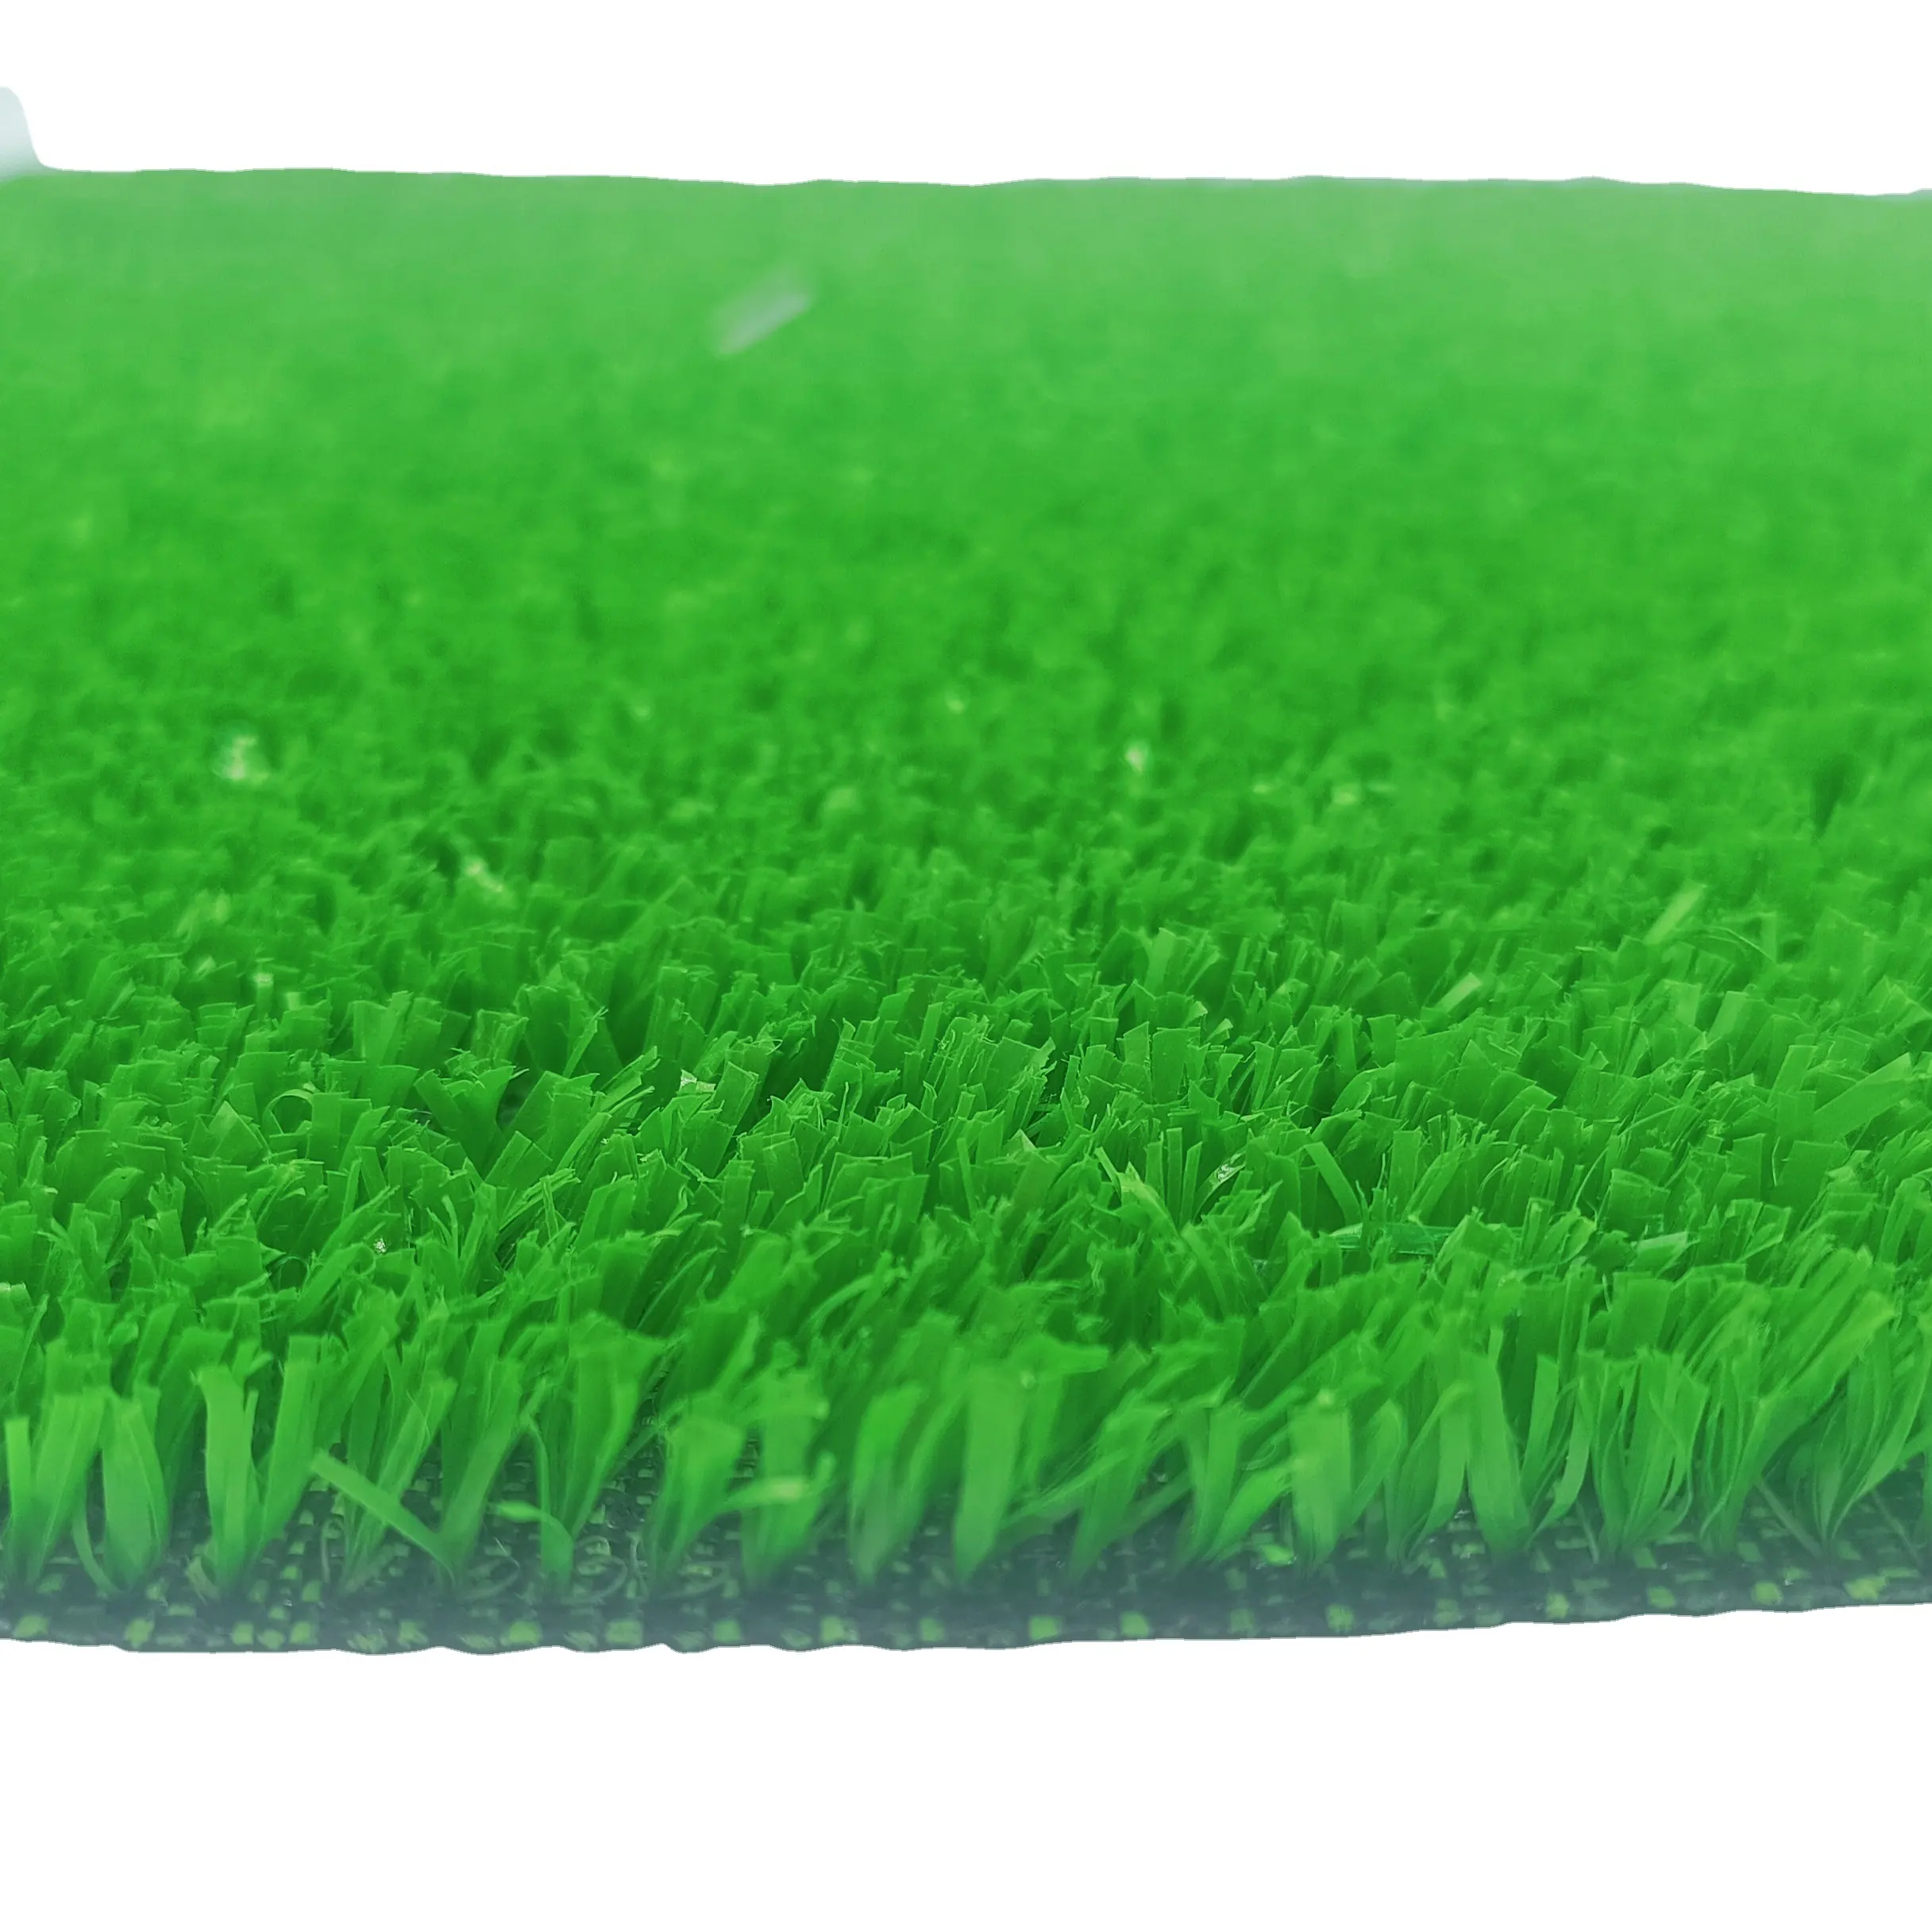 Karpet rumput taman hijau lanskap tinggi 10mm bahan PE tahan lama